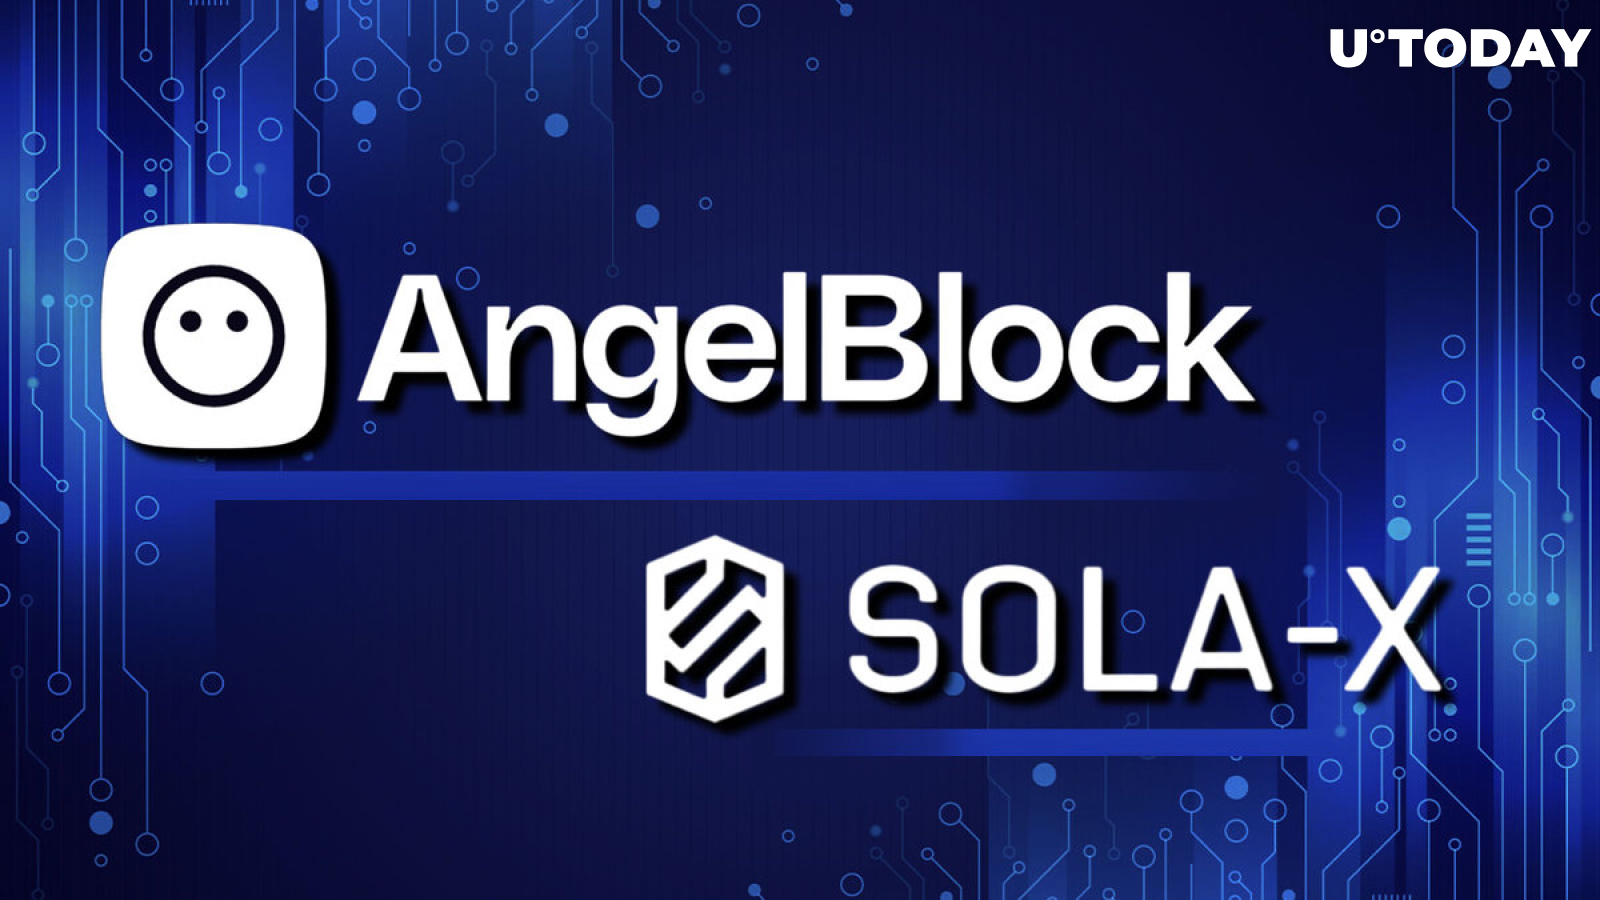 AngelBlock Joins Aleph Zero Ecosystem Program, Shares Major Update on SOLA-X Funding